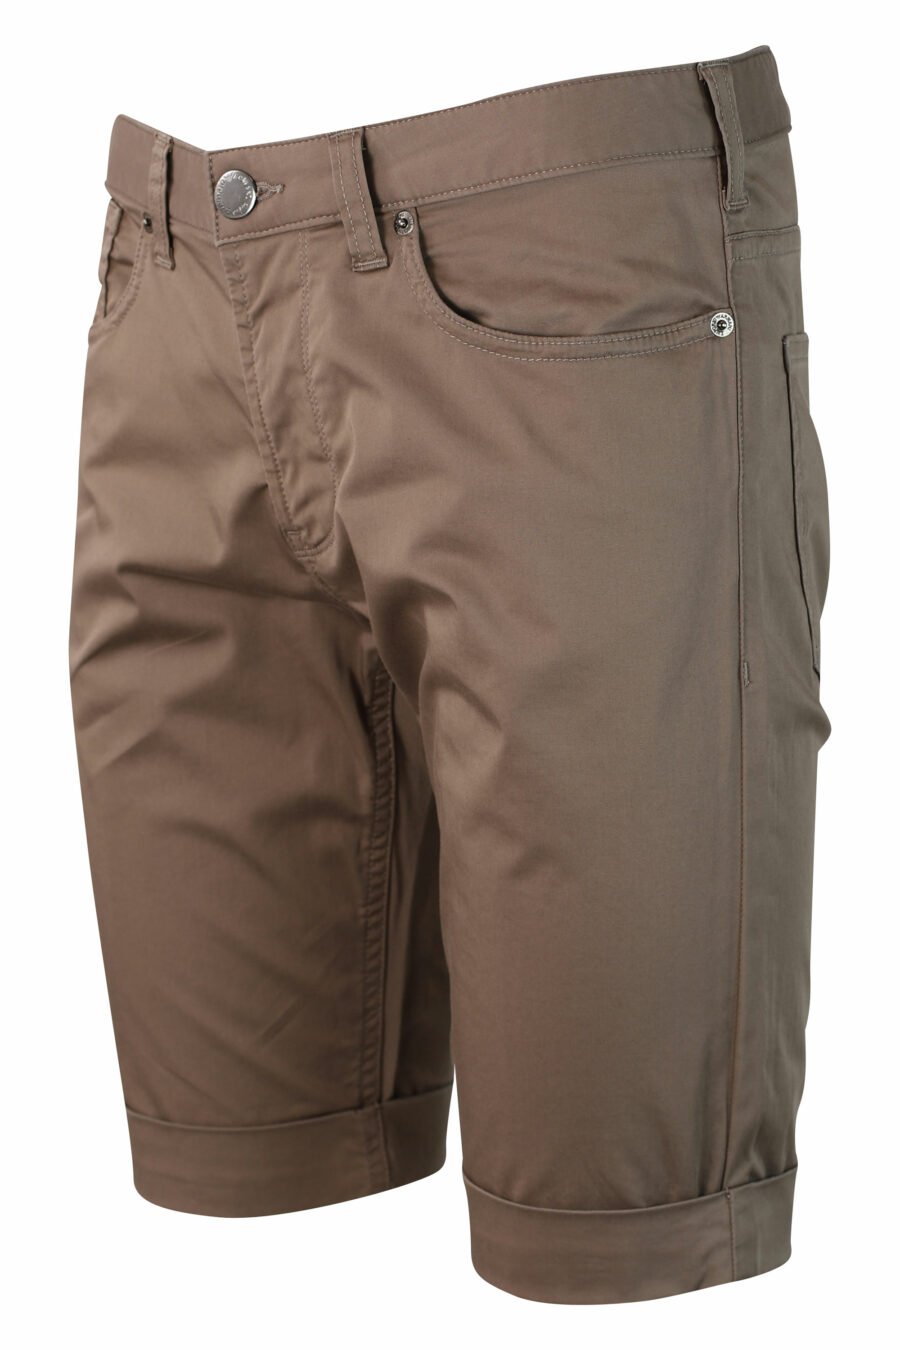 Pantalón corto beige con minilogo - IMG 9903 1